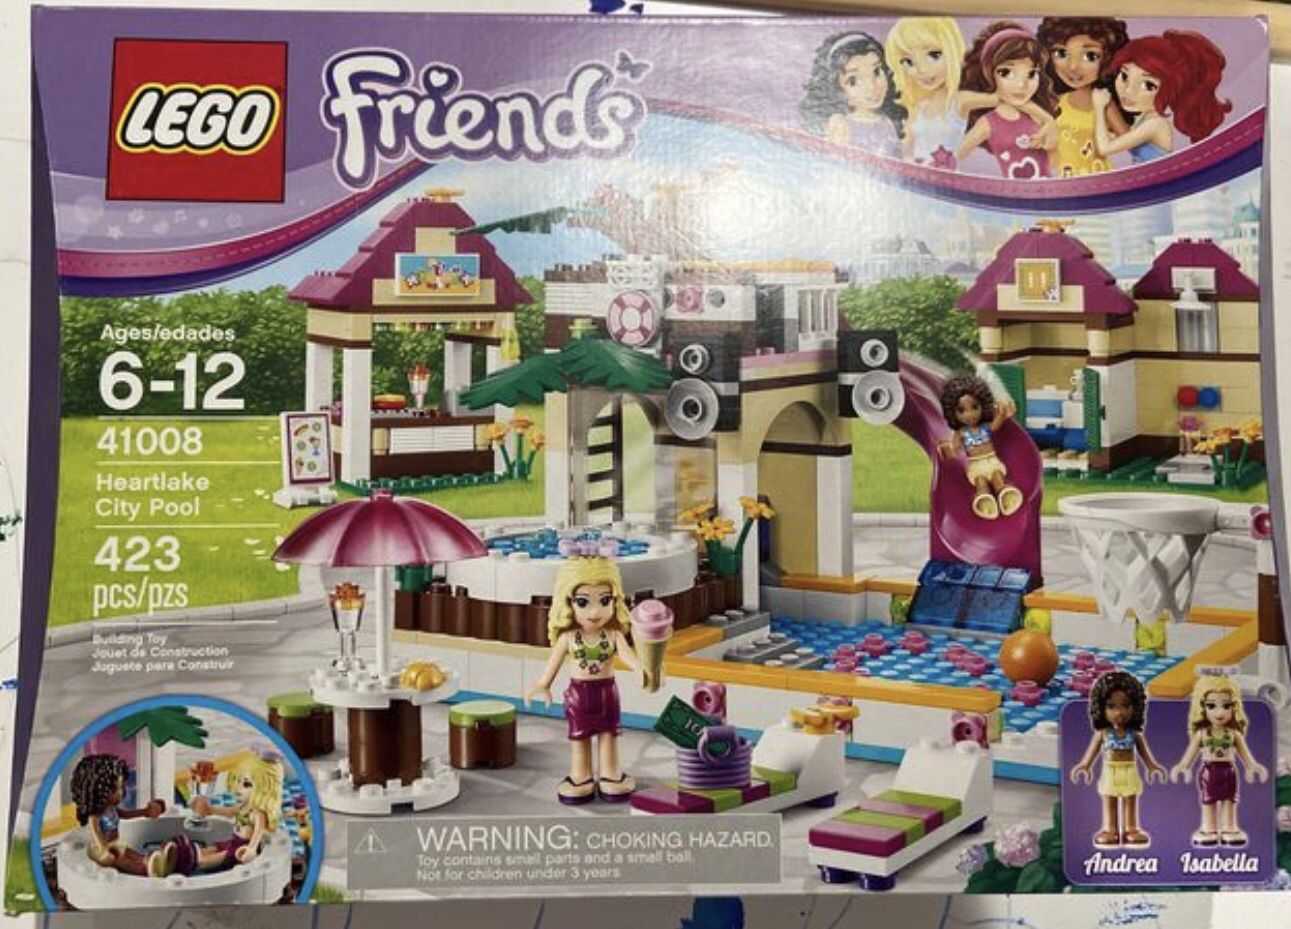 BRAND NEW Lego Friends “Heartlake City Pool”